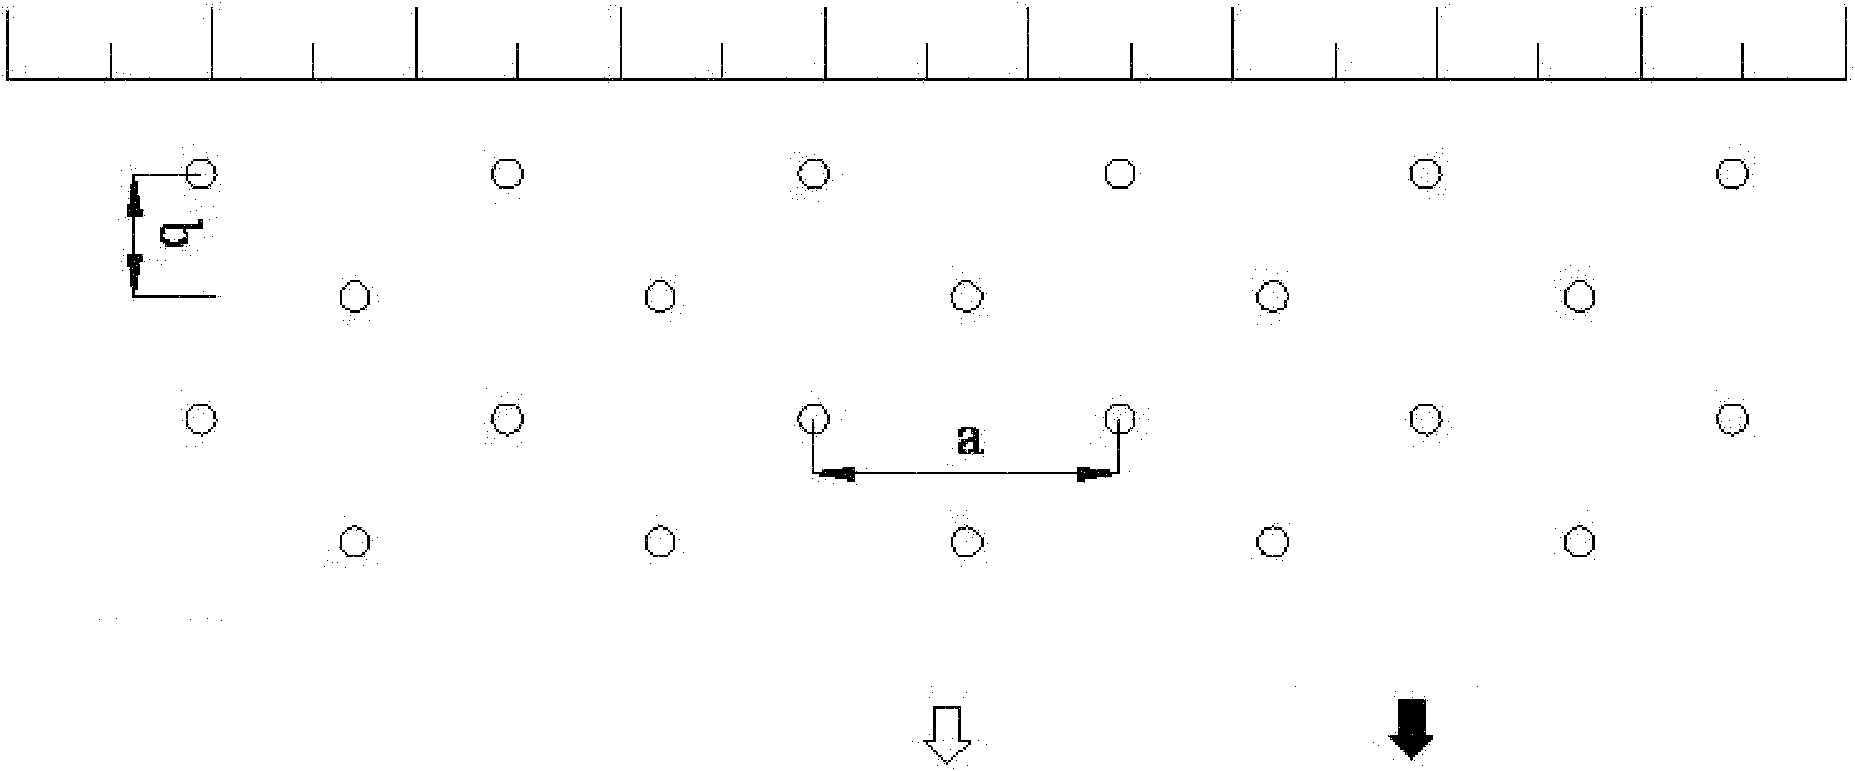 Reverse hole distributing method used in longhole bench blasting